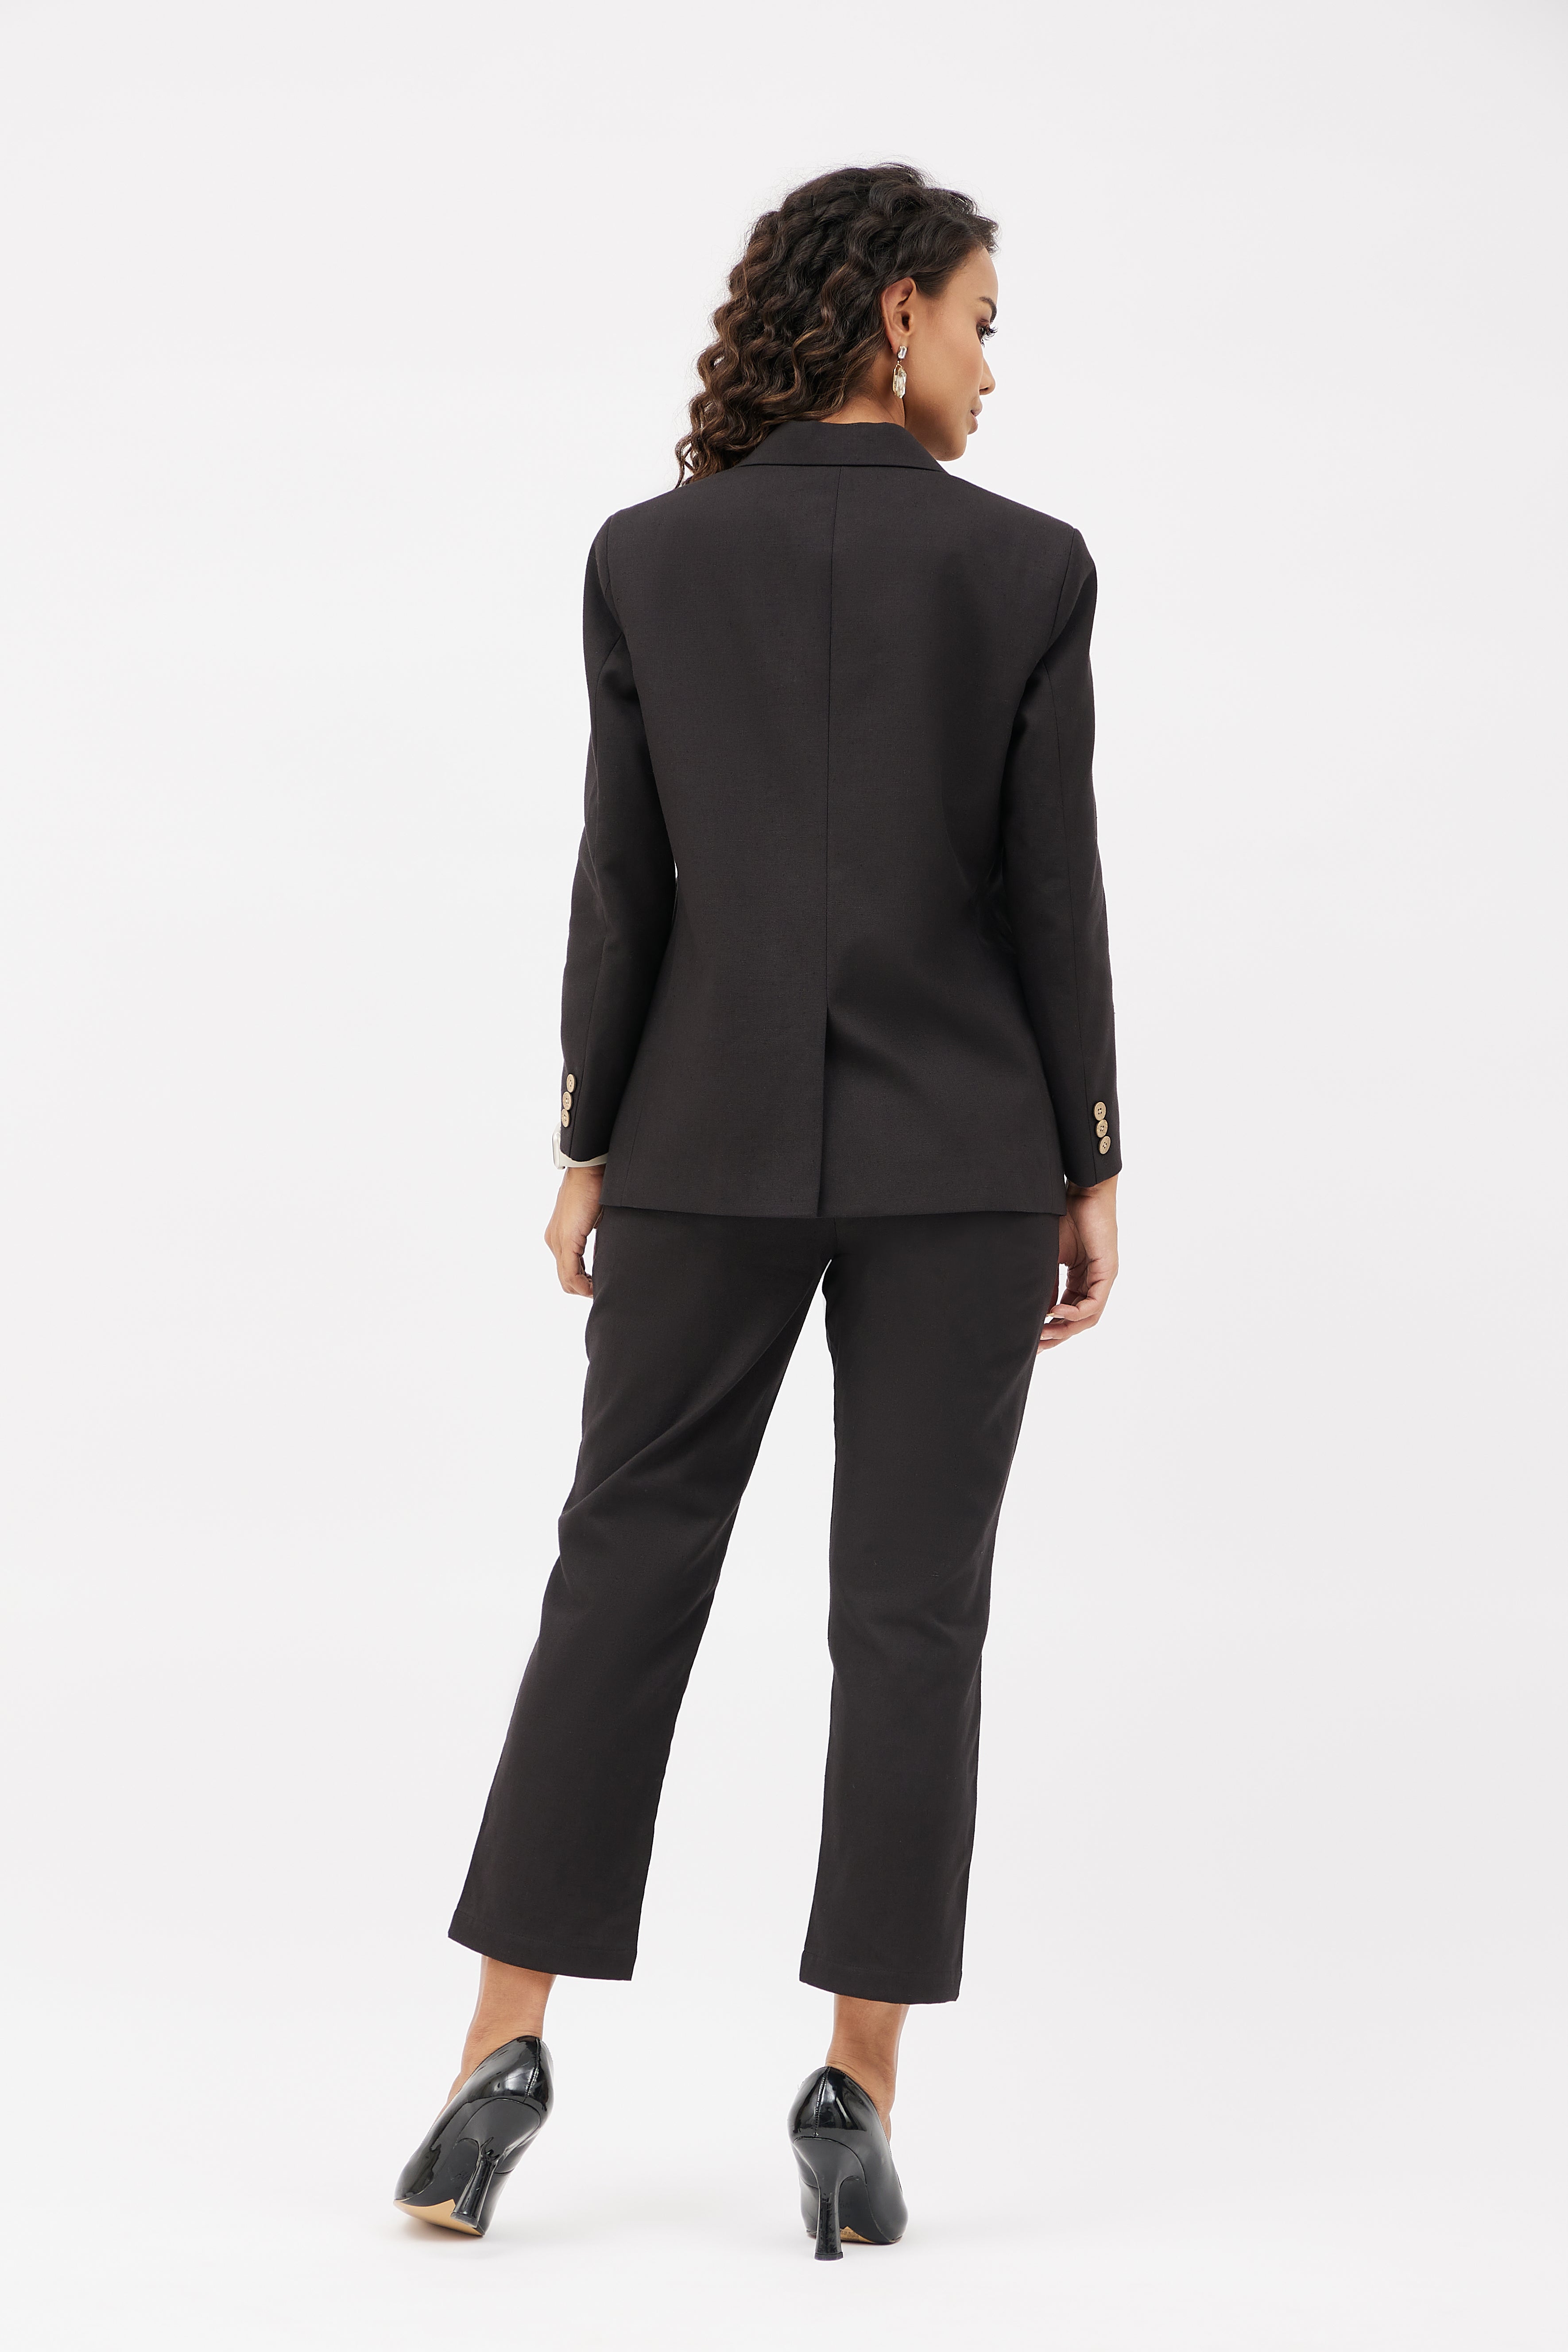 Fashion Female Career Office Pants Suit Casual Women Business Trouser Set  Work | eBay